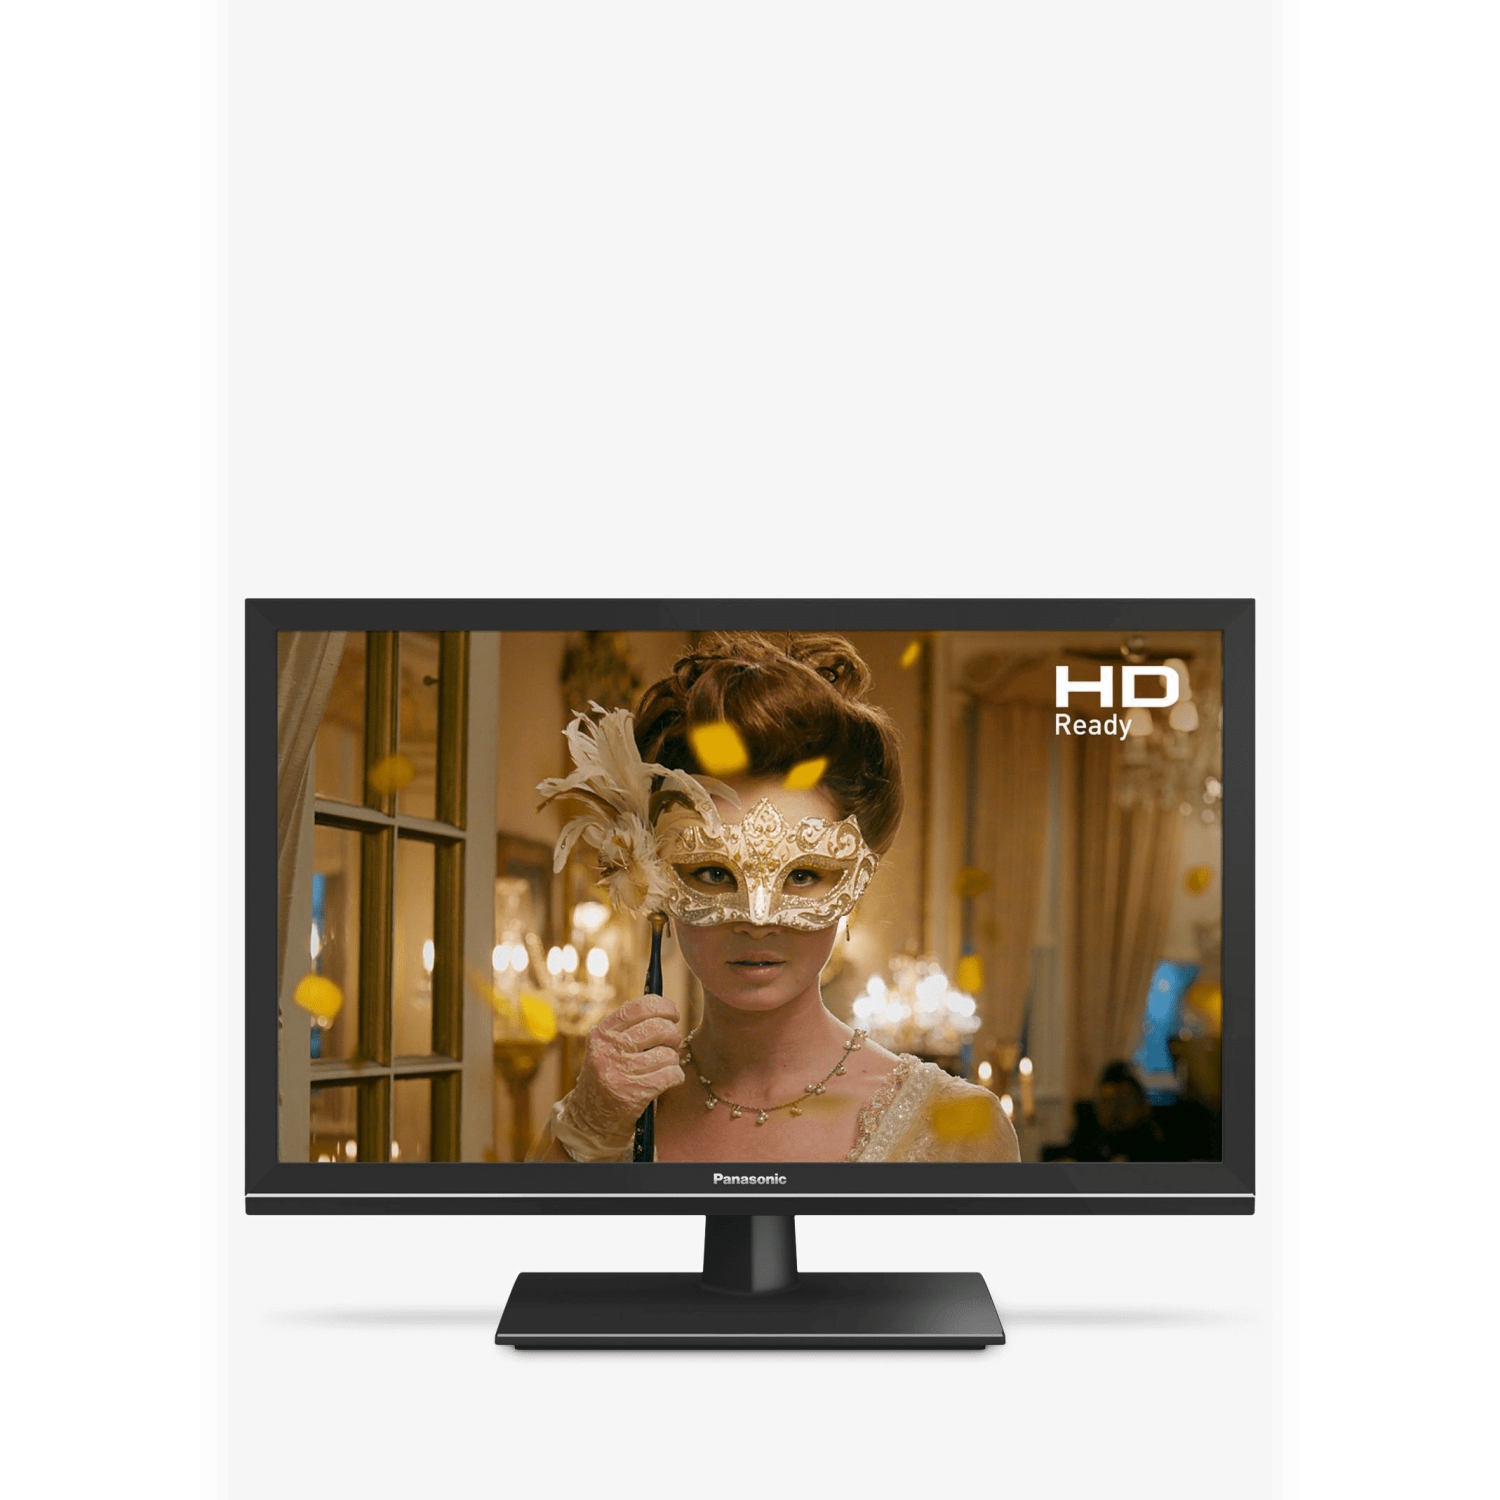 Panasonic TX-24FS500B LED HDR HD Ready 720p Smart TV, 24" with Freeview Play, Black - 0